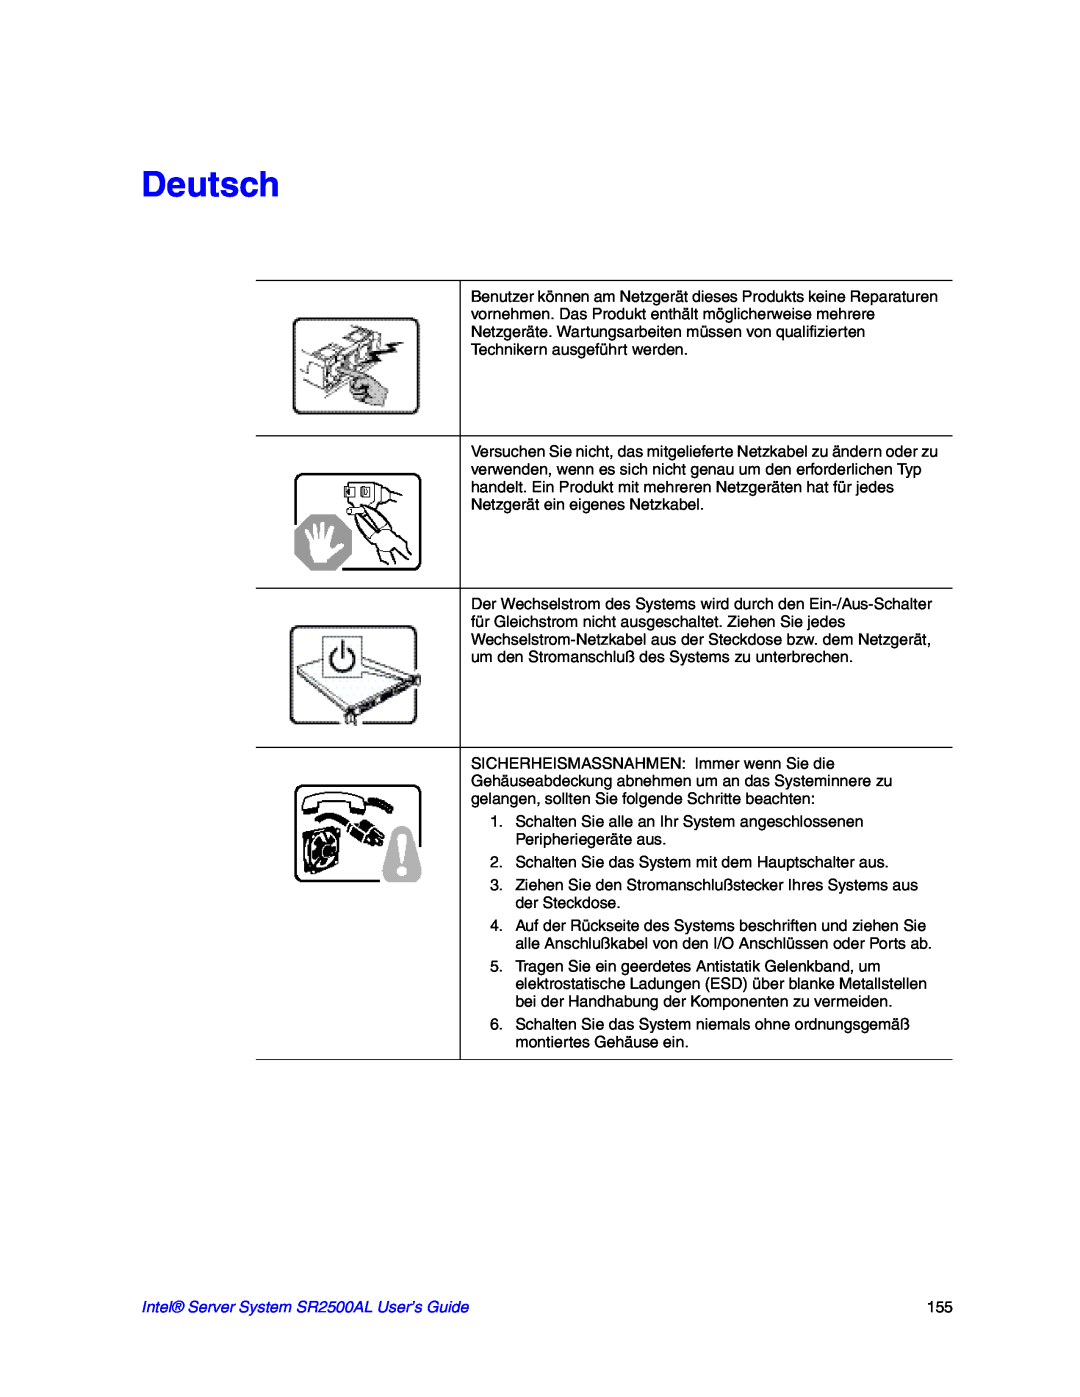 Intel manual Deutsch, Intel Server System SR2500AL User’s Guide 